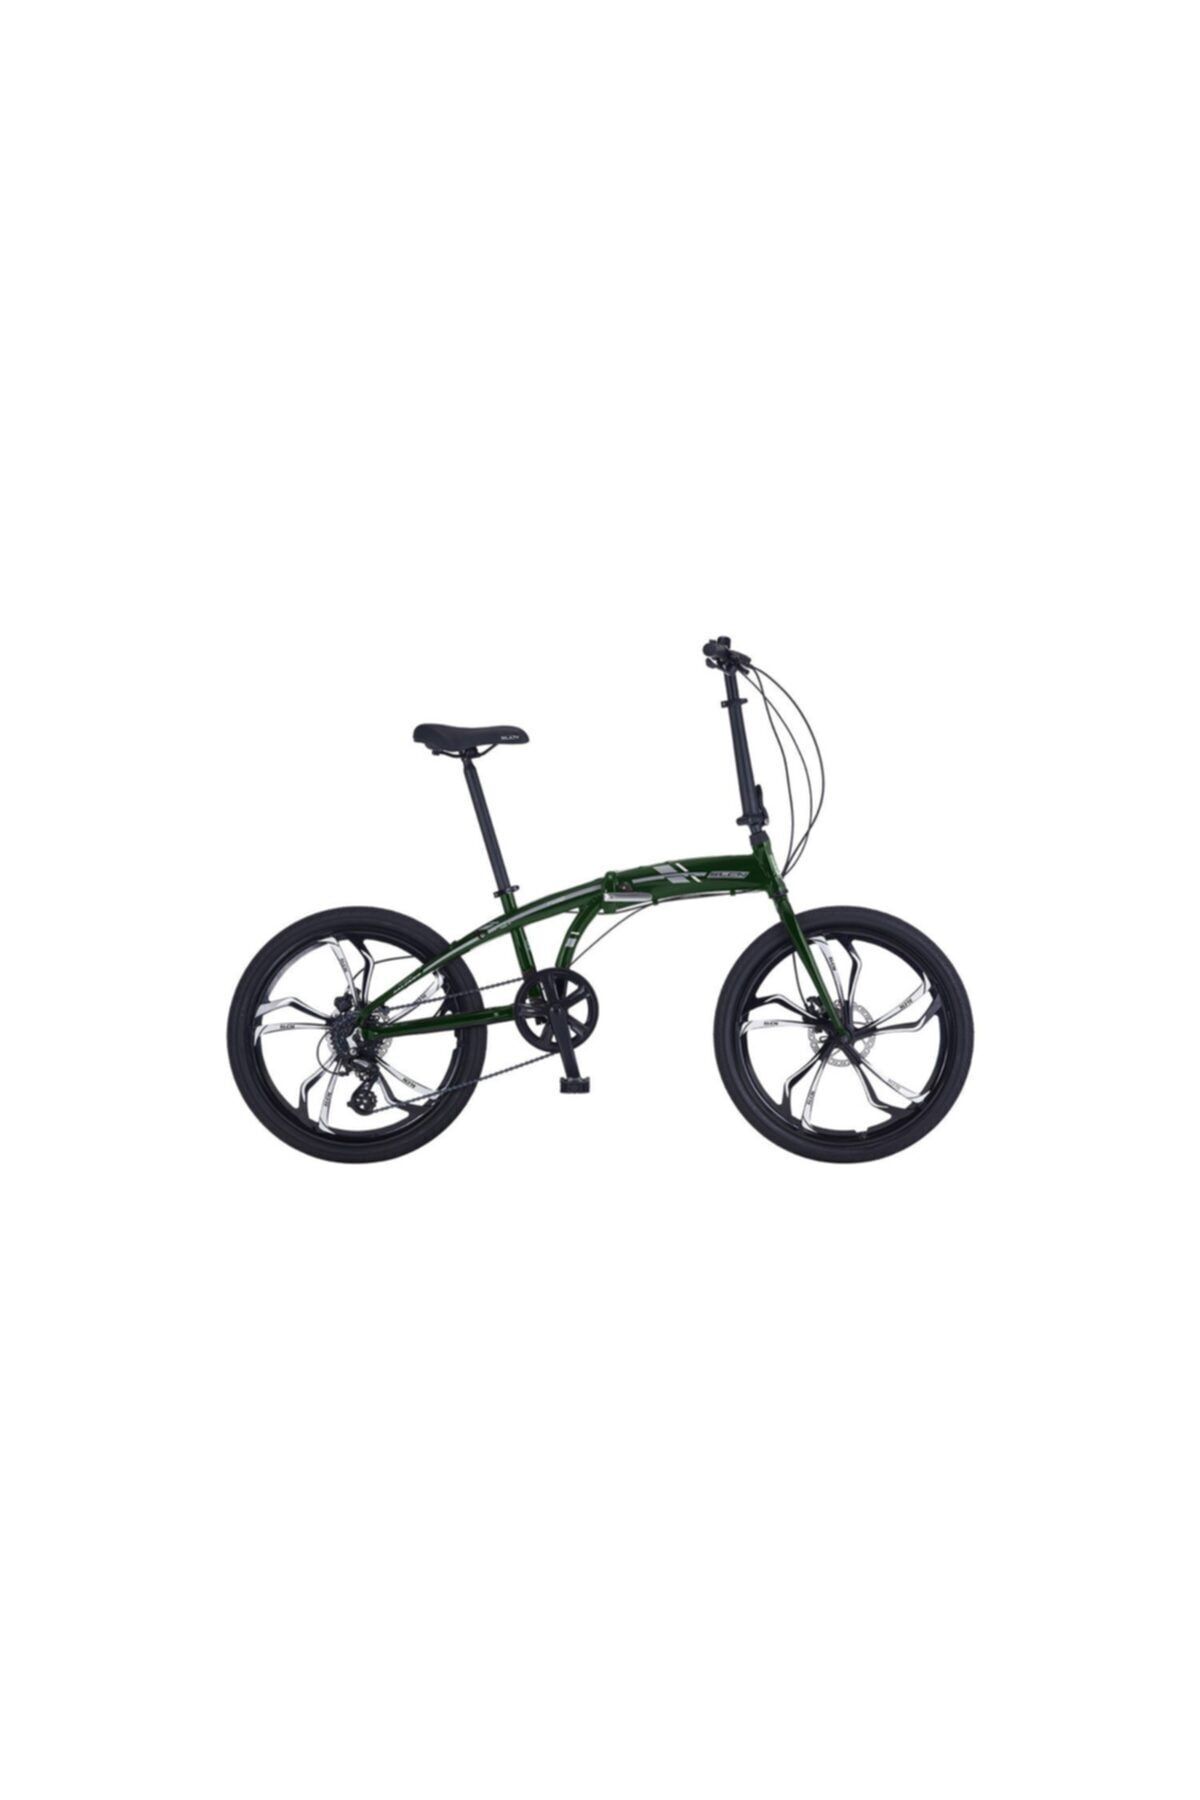 Salcano Slcn 400 24 Hd Shimano Altus Katlanır Bisiklet Metalik Yeşil